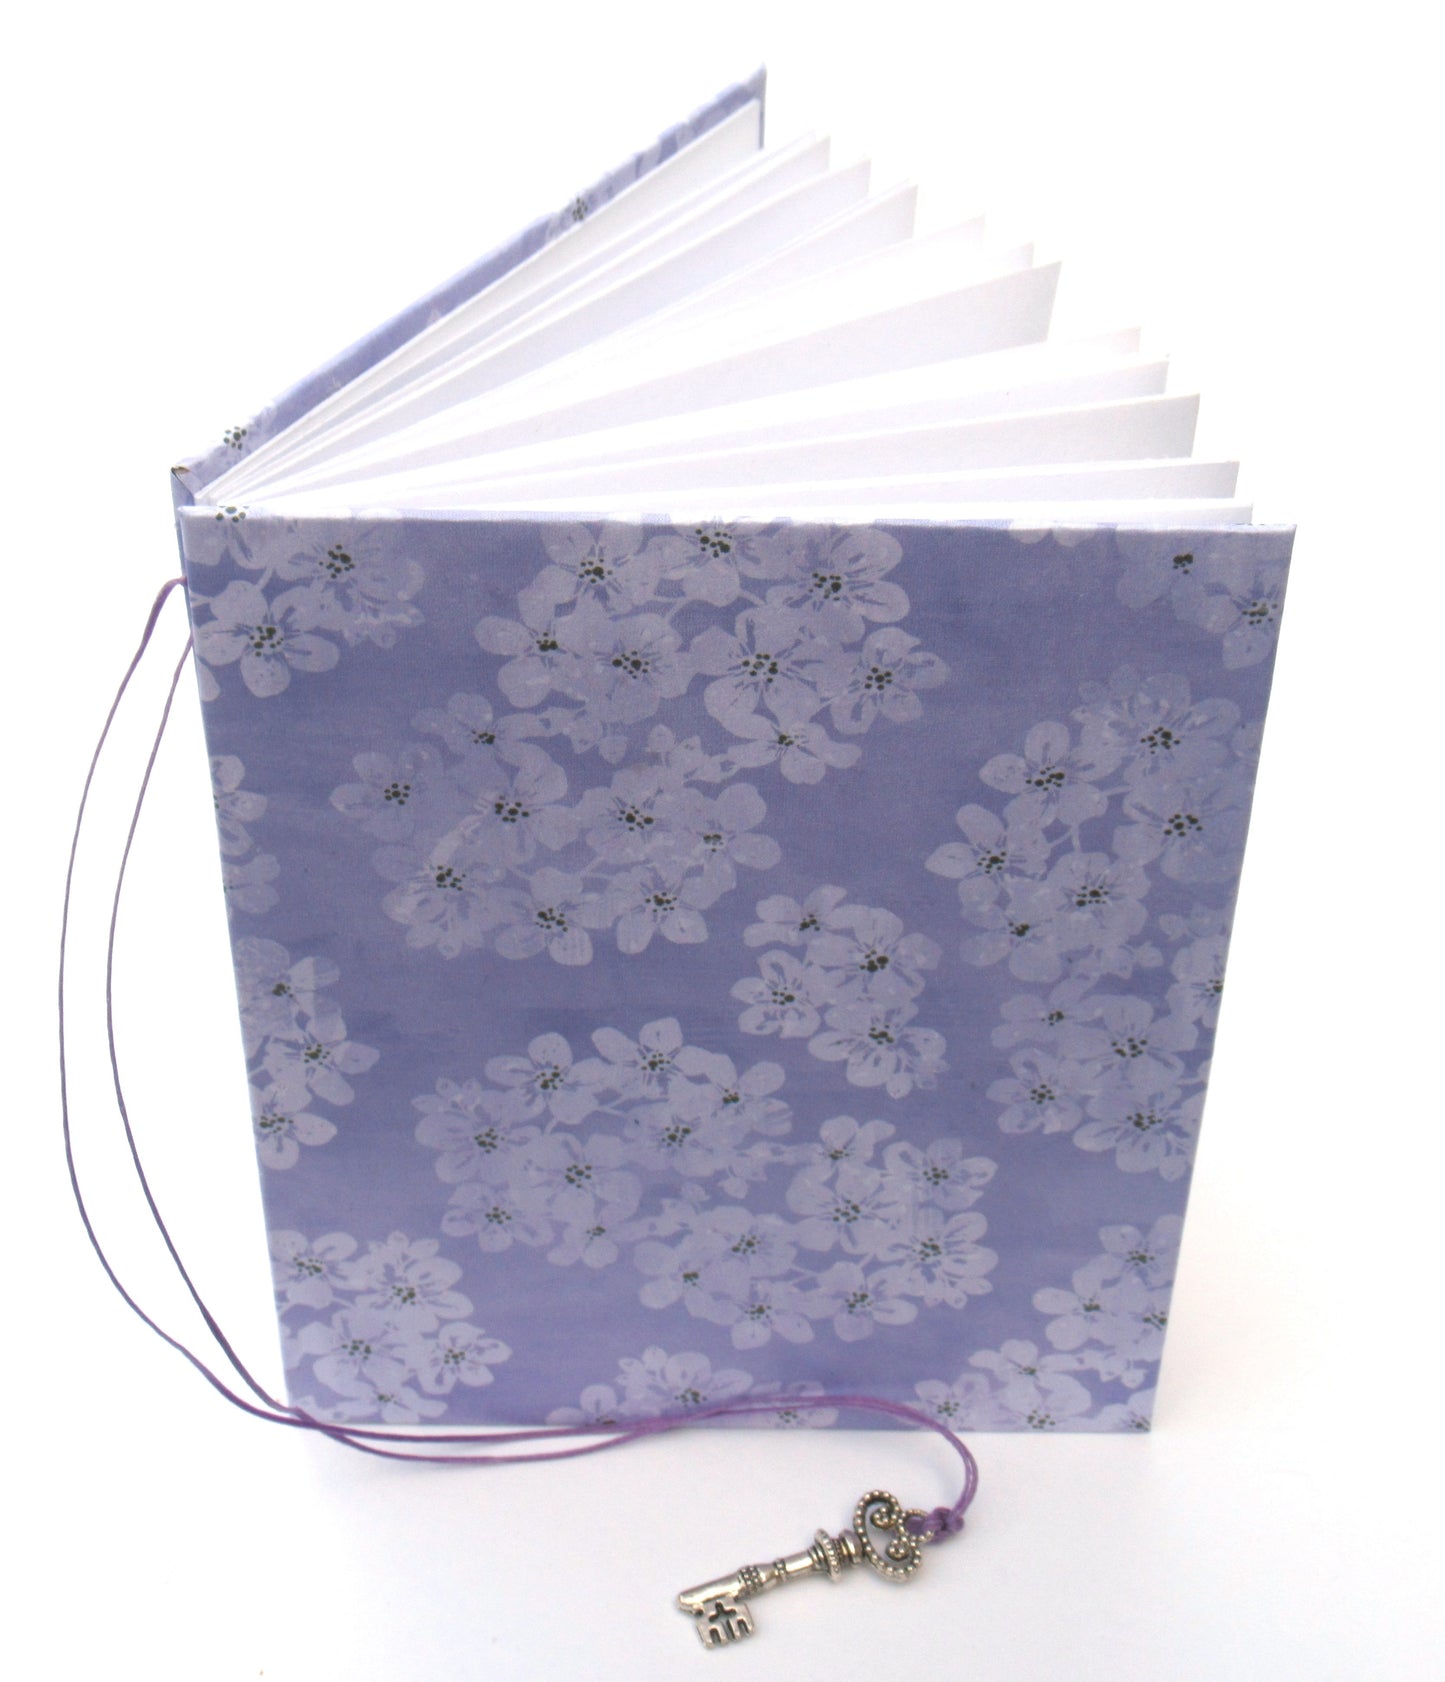 Journal - Handmade JOURNAL - Hard Cover Journal - Handbound Blank Notebook - Gratitude Journal - Floral Gardening Journal - Stationery - Literacy Project - 310